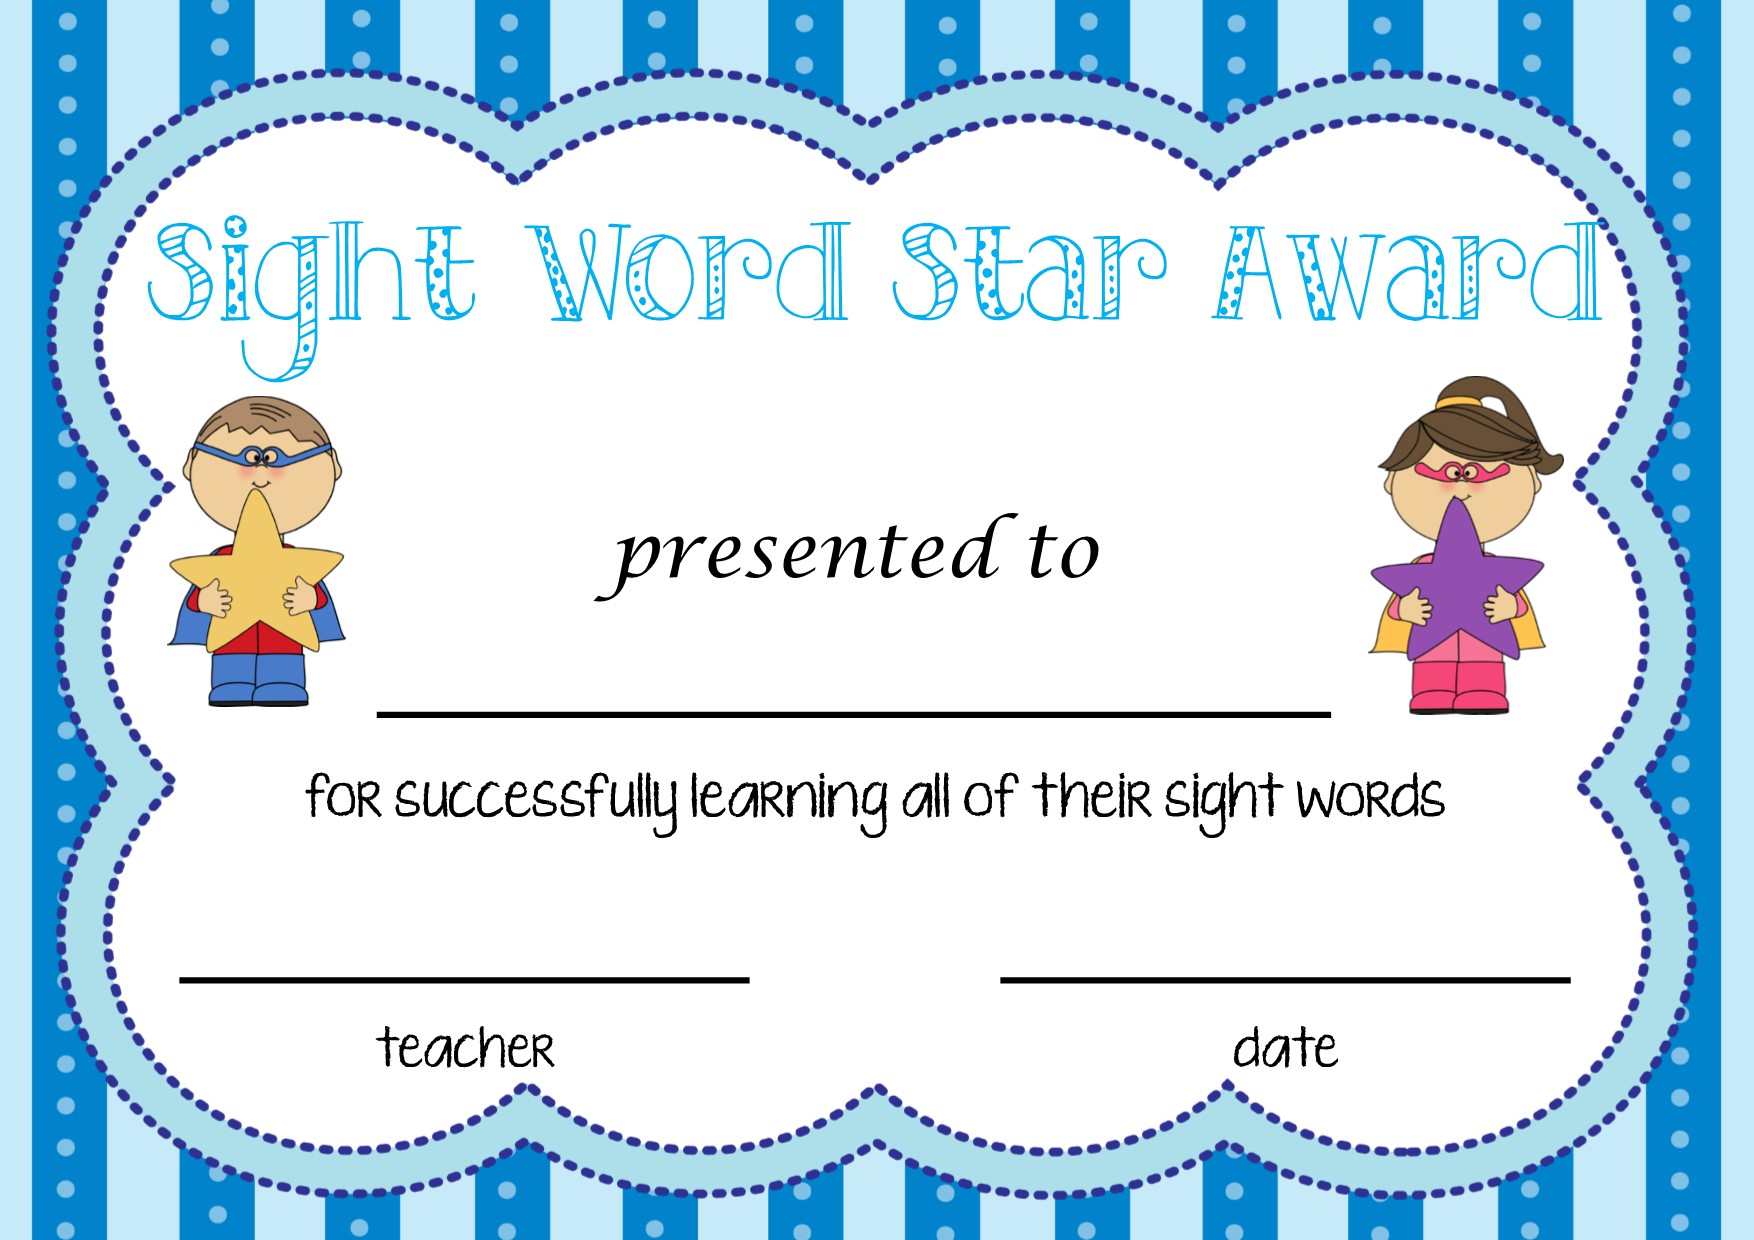 Sight Word Star Award